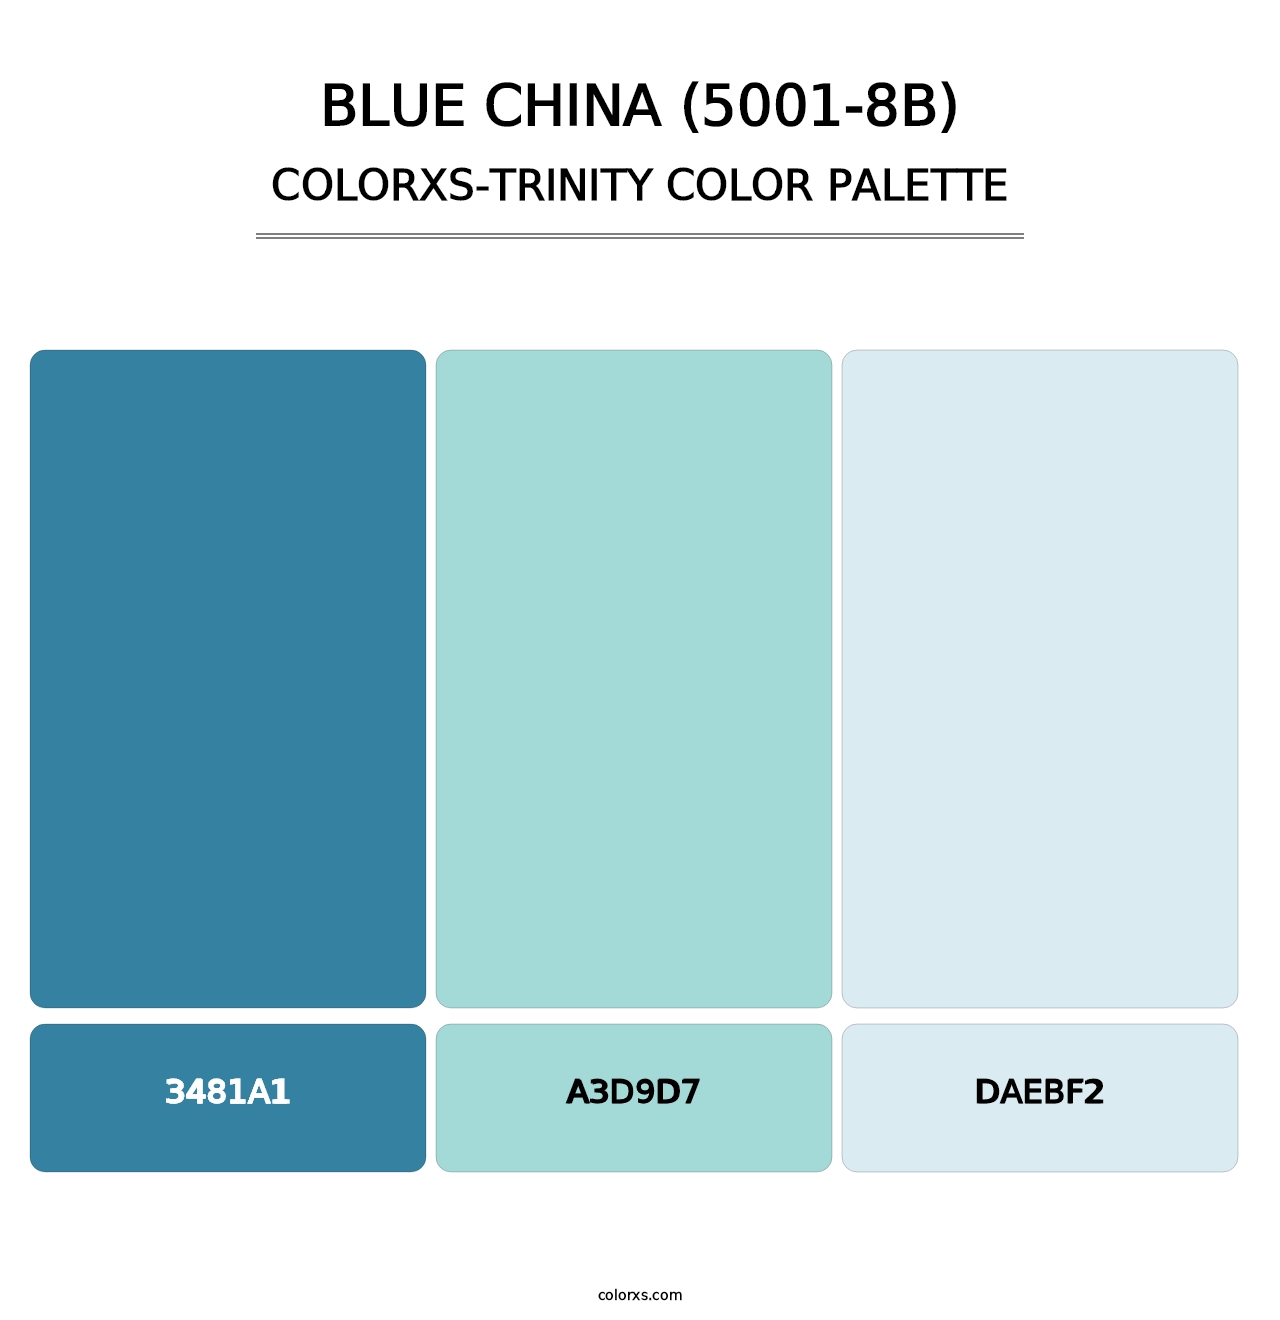 Blue China (5001-8B) - Colorxs Trinity Palette